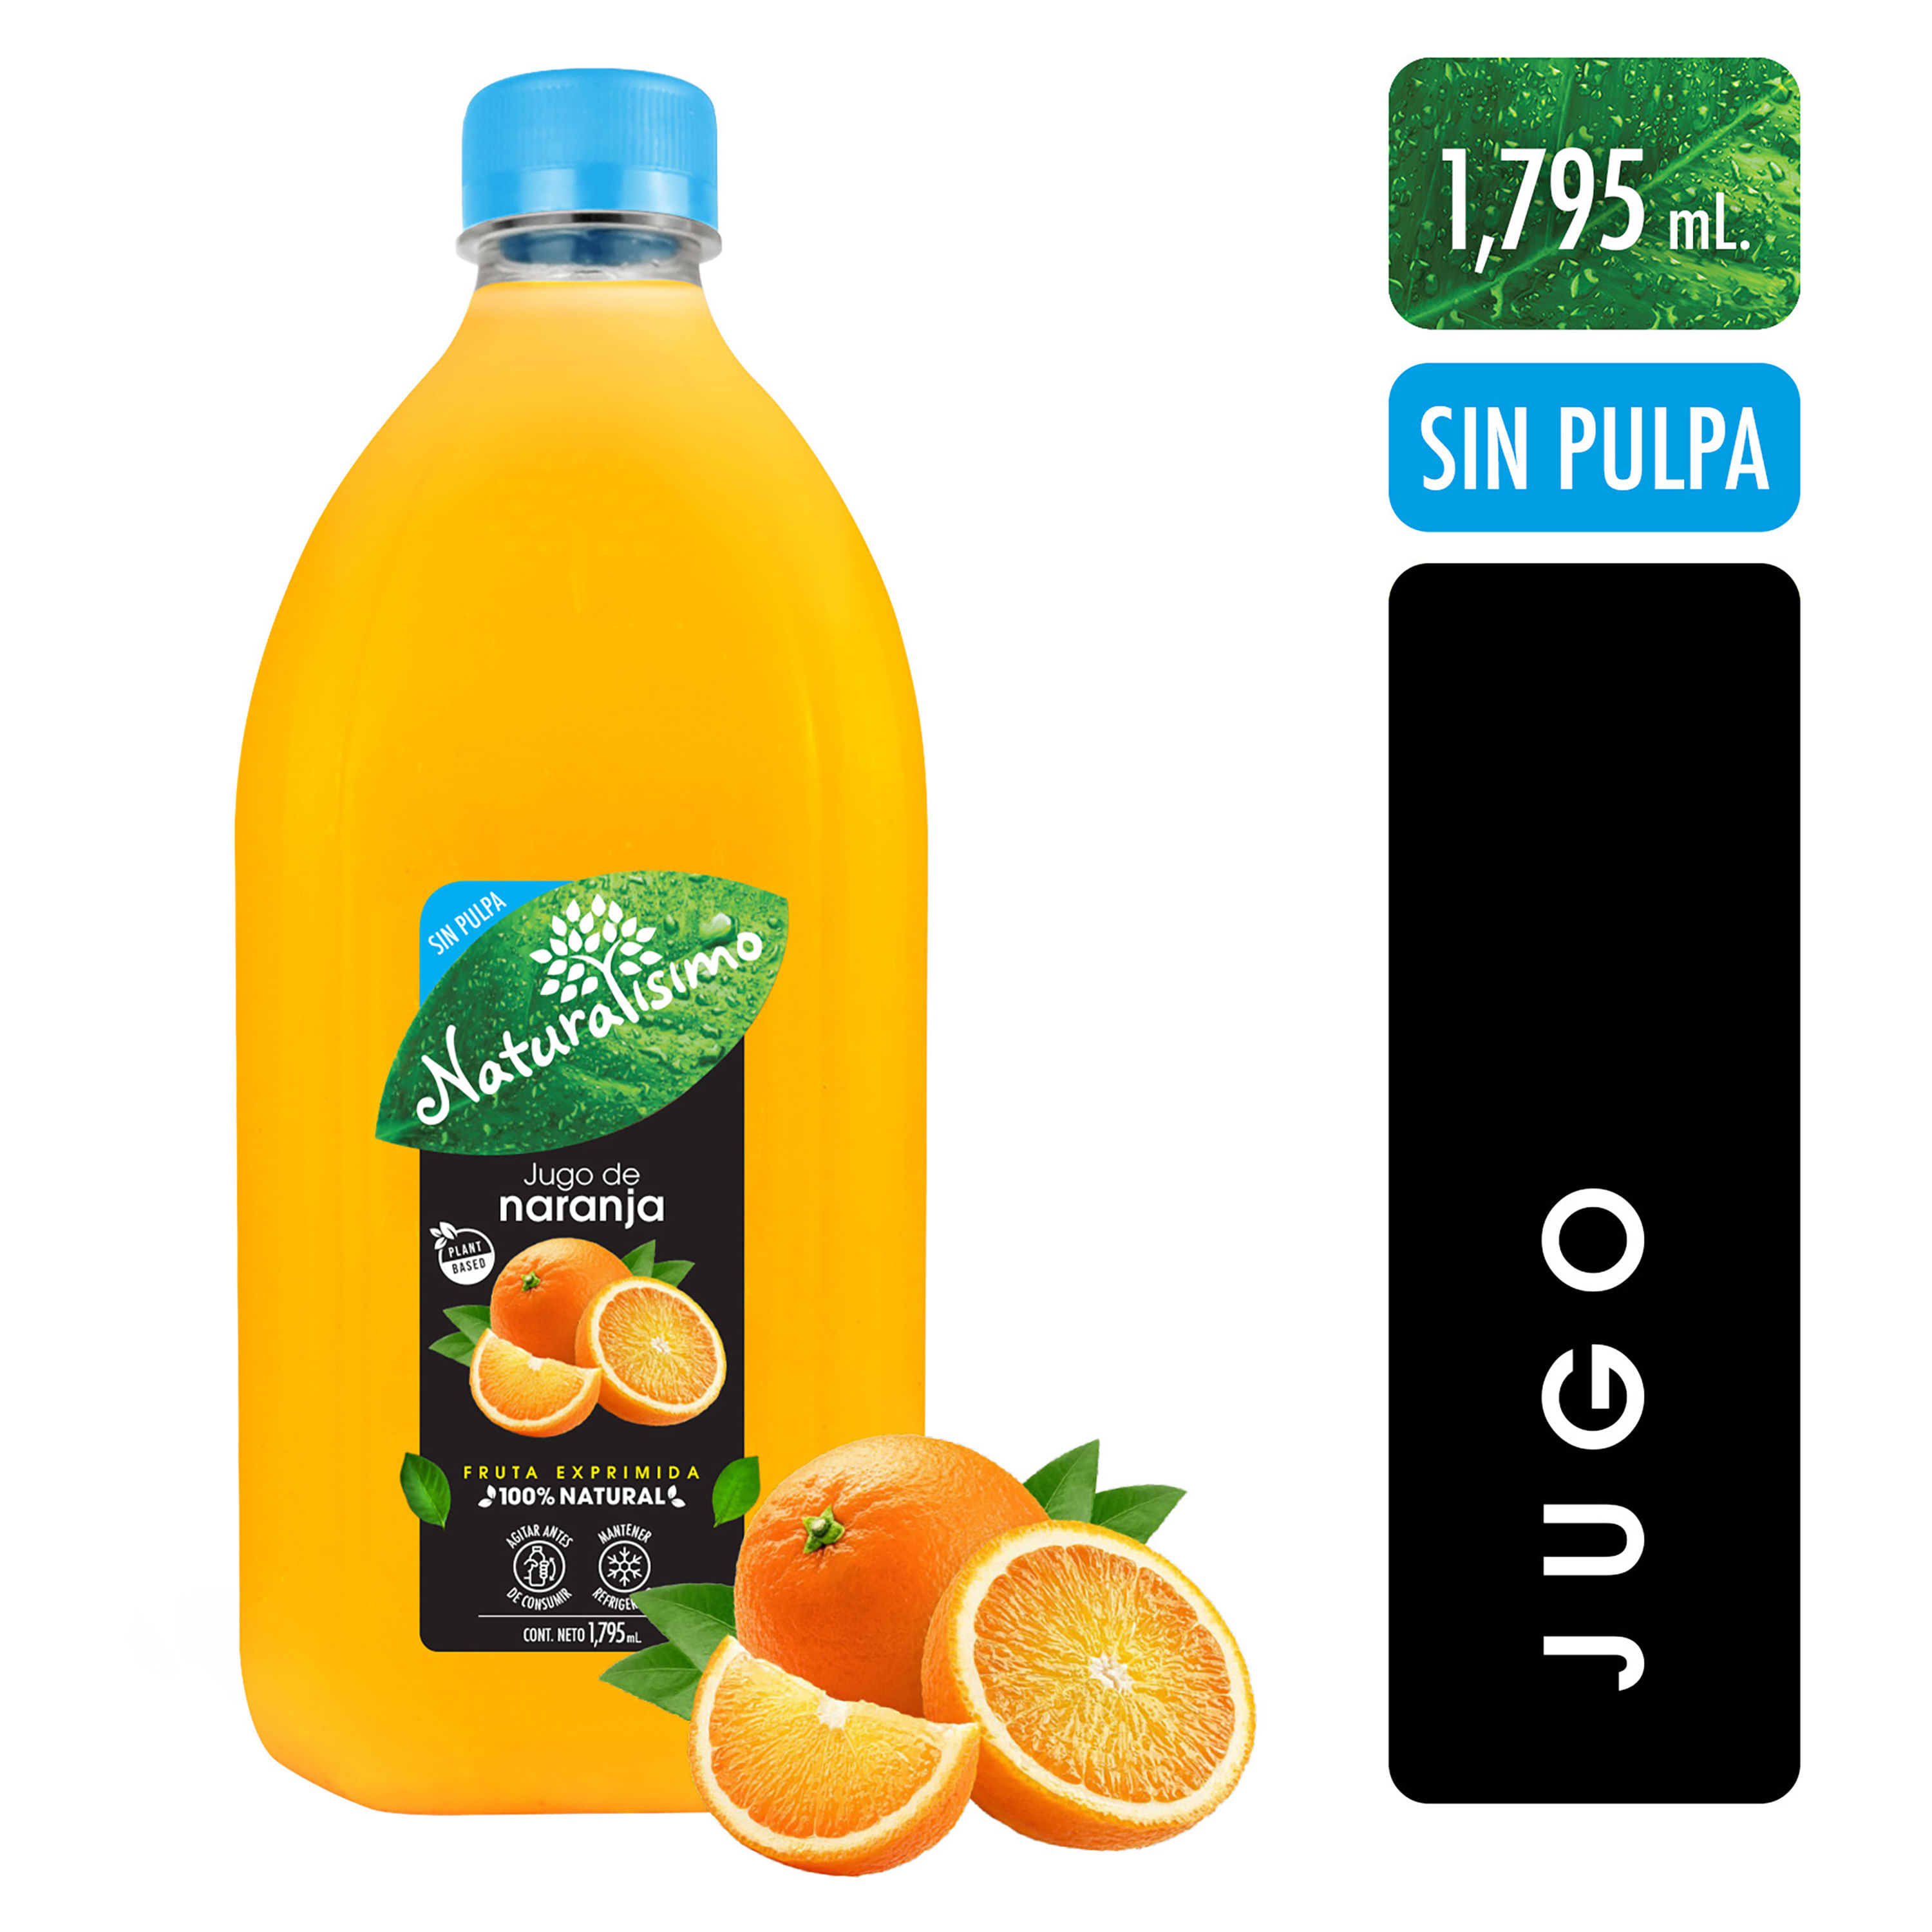 Jugo-Naturalisimo-Naranja-Sin-Pulpa-1795ml-1-31152